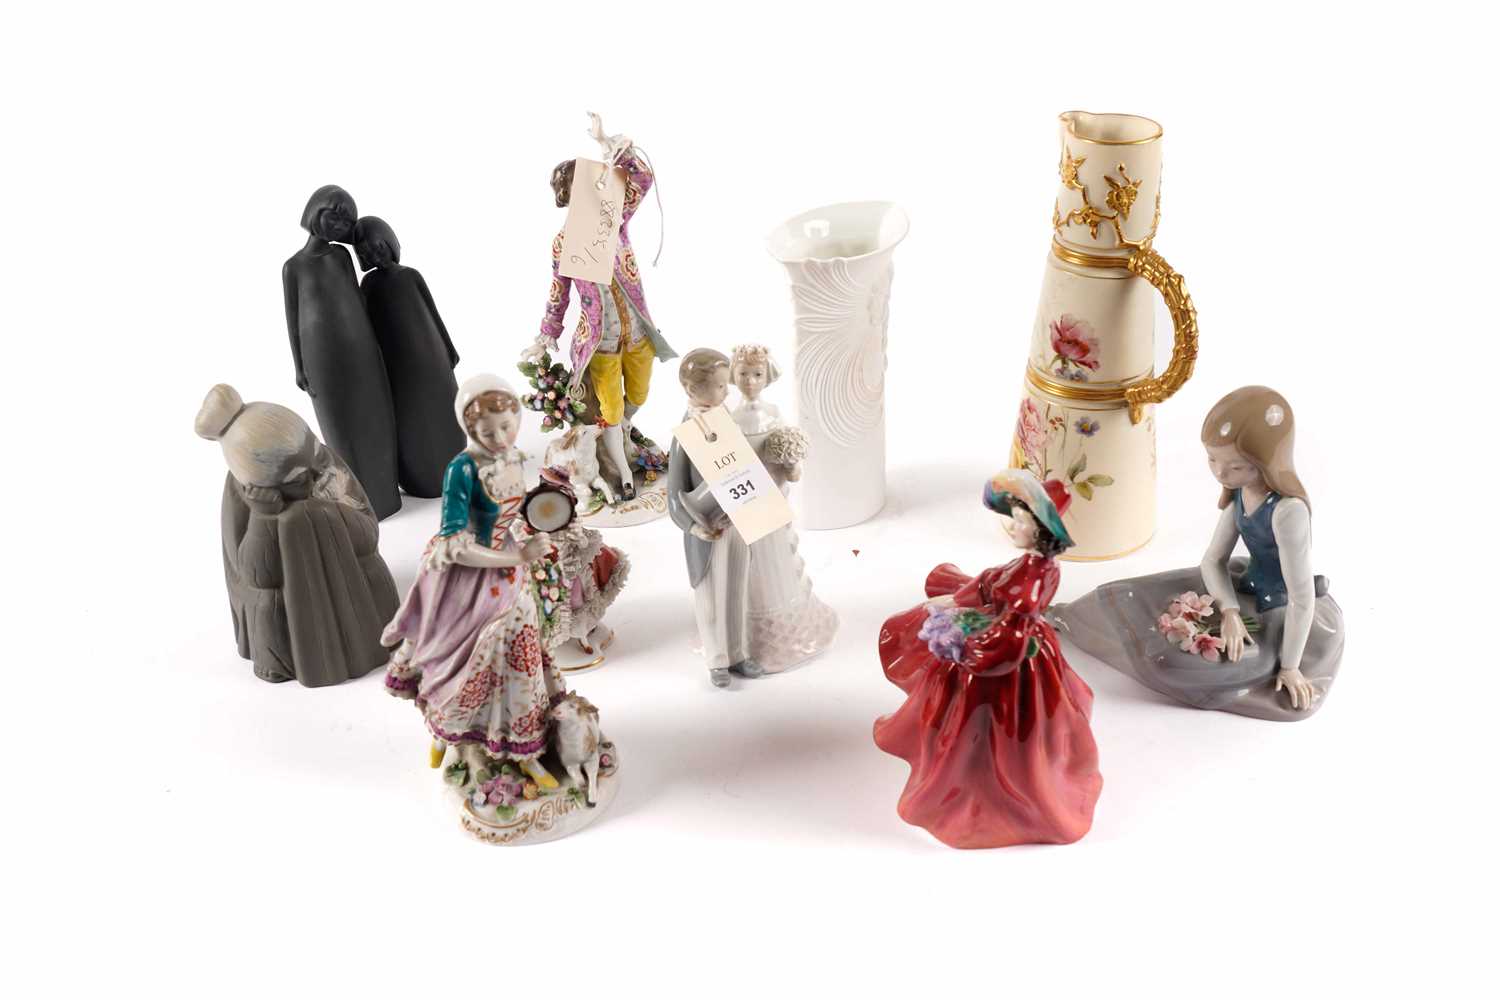 A selection of decorative ceramics